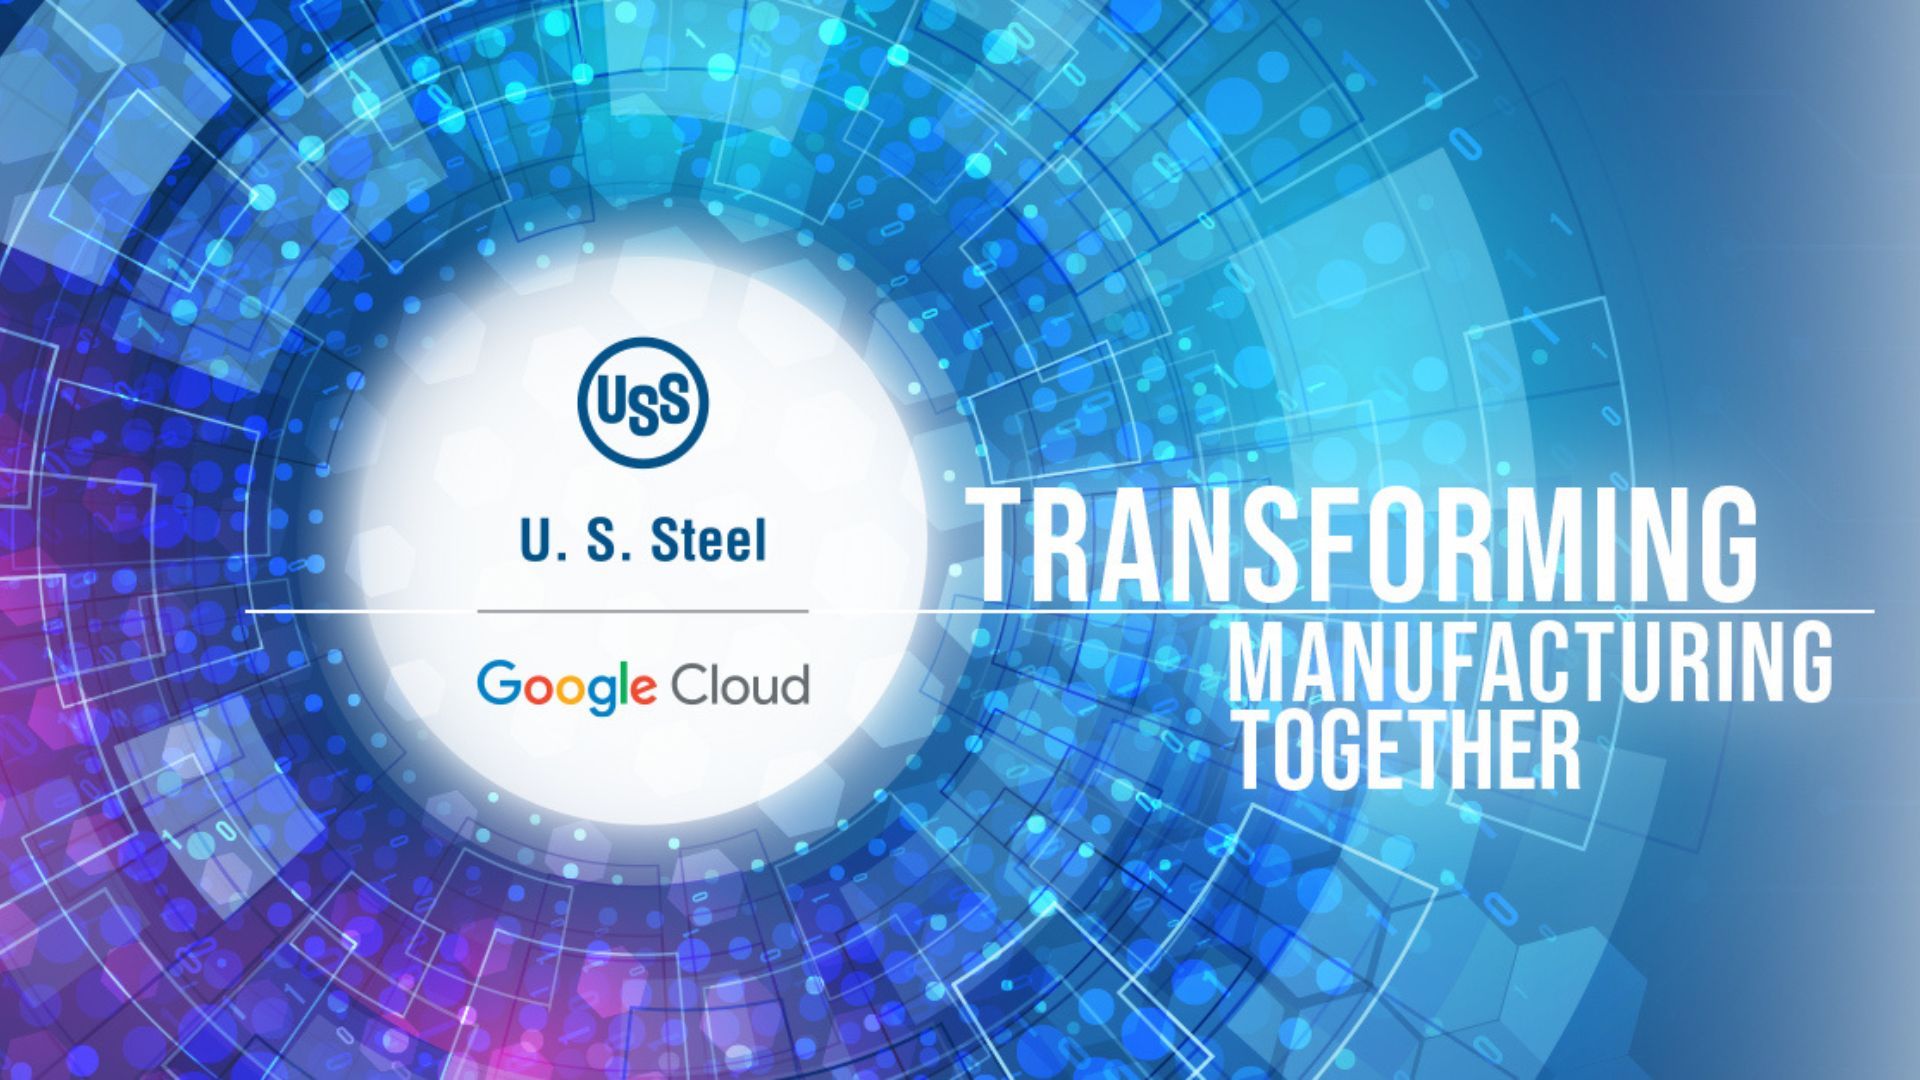 U. S. Steel and Google Cloud's partnership